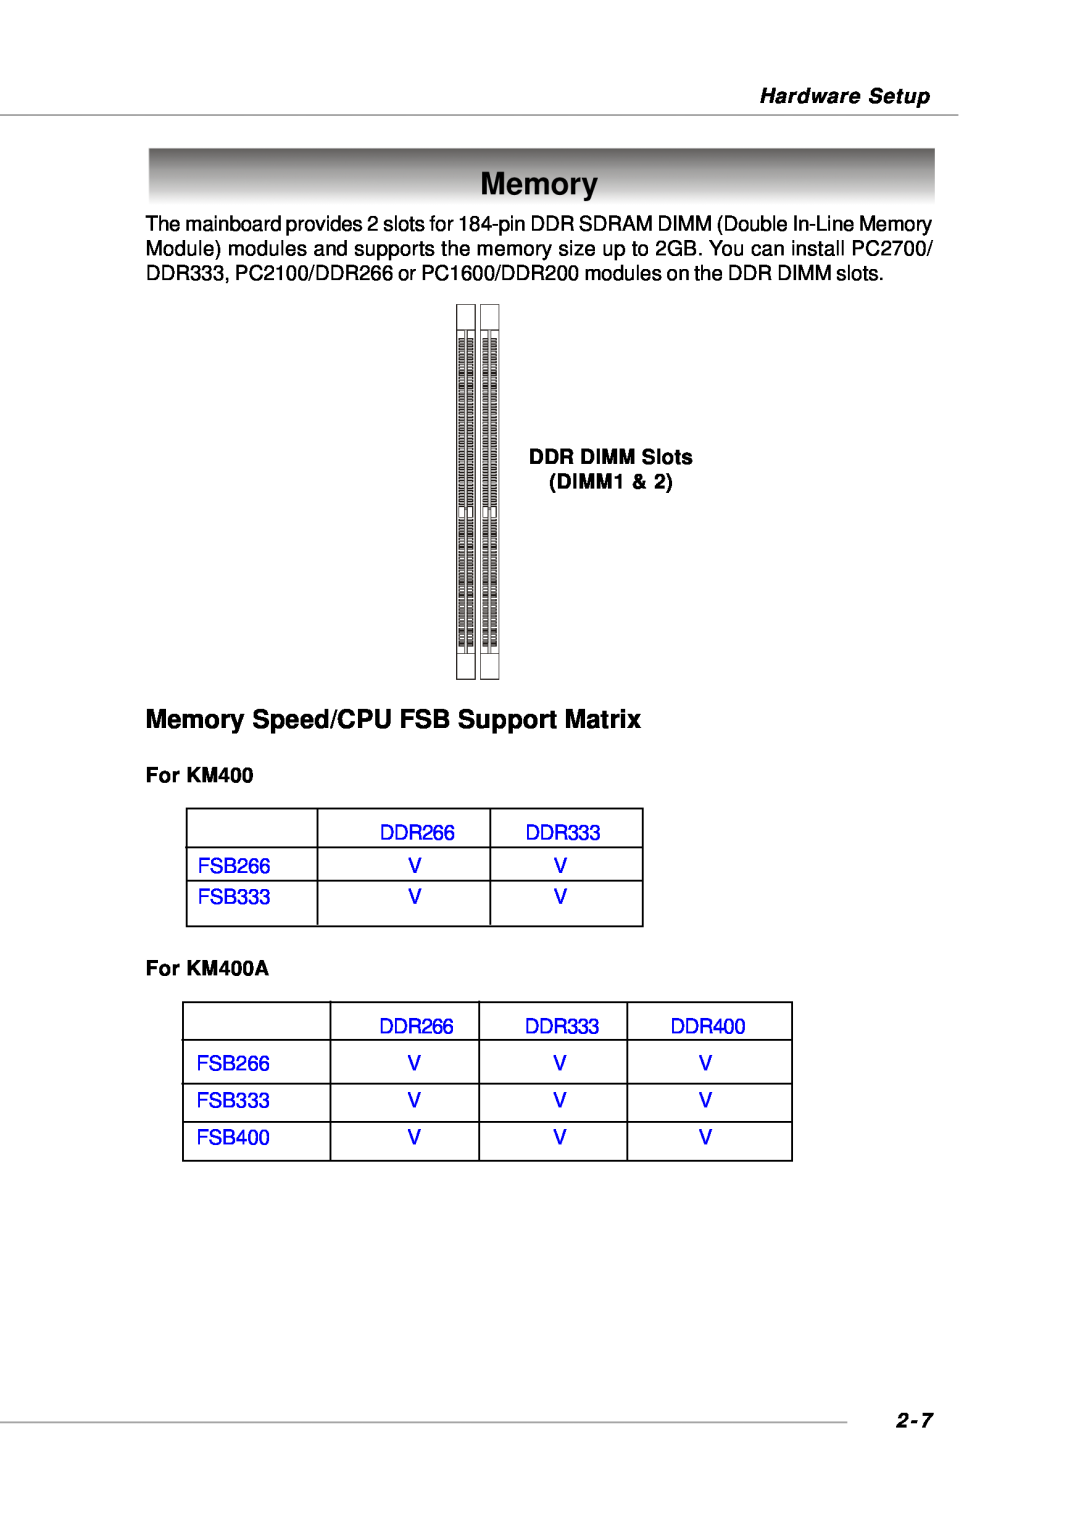 Intel KM4AM, KM4M, MS-6734 Memory Speed/CPU FSB Support Matrix, DDR DIMM Slots DIMM1, Hardware Setup, For KM400A 